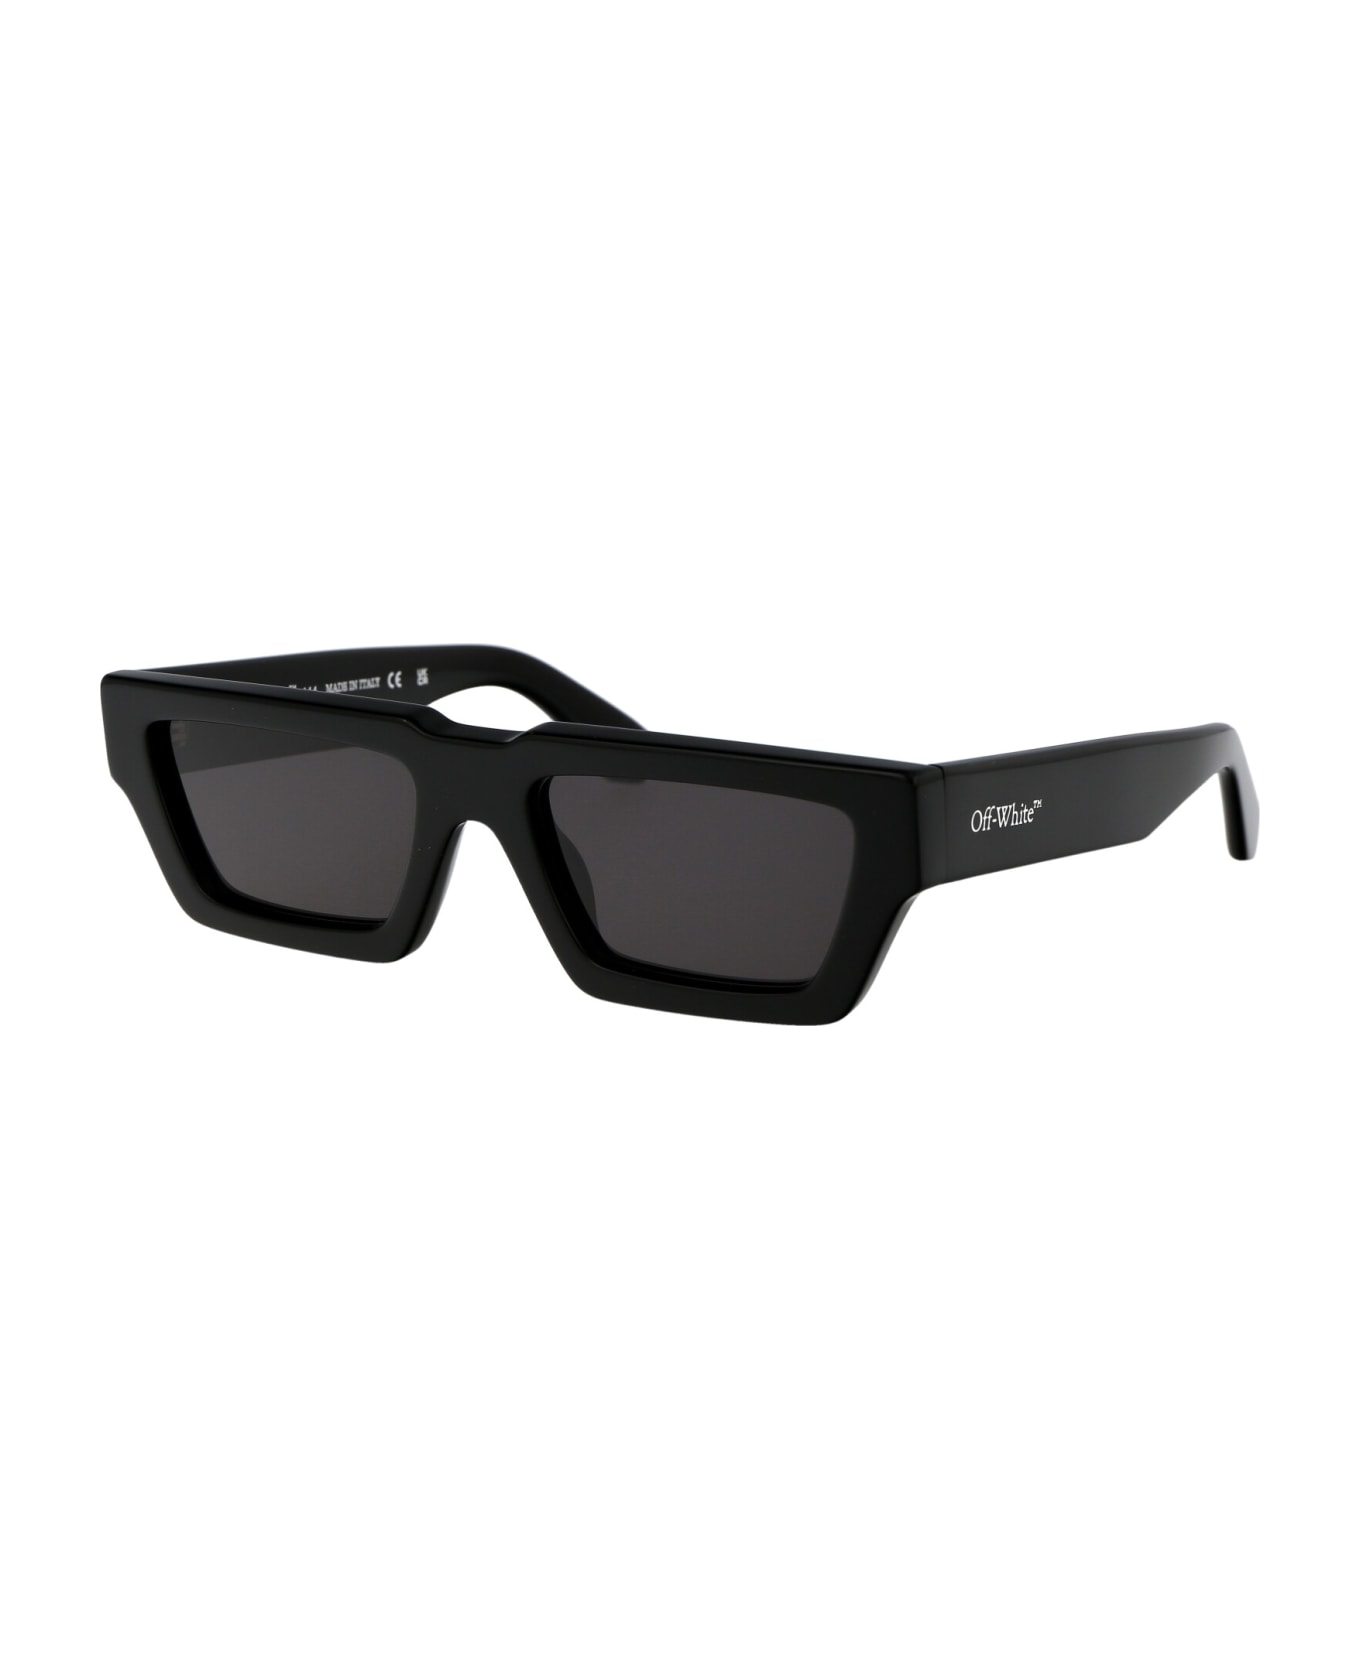 Off-White Manchester Sunglasses - Black